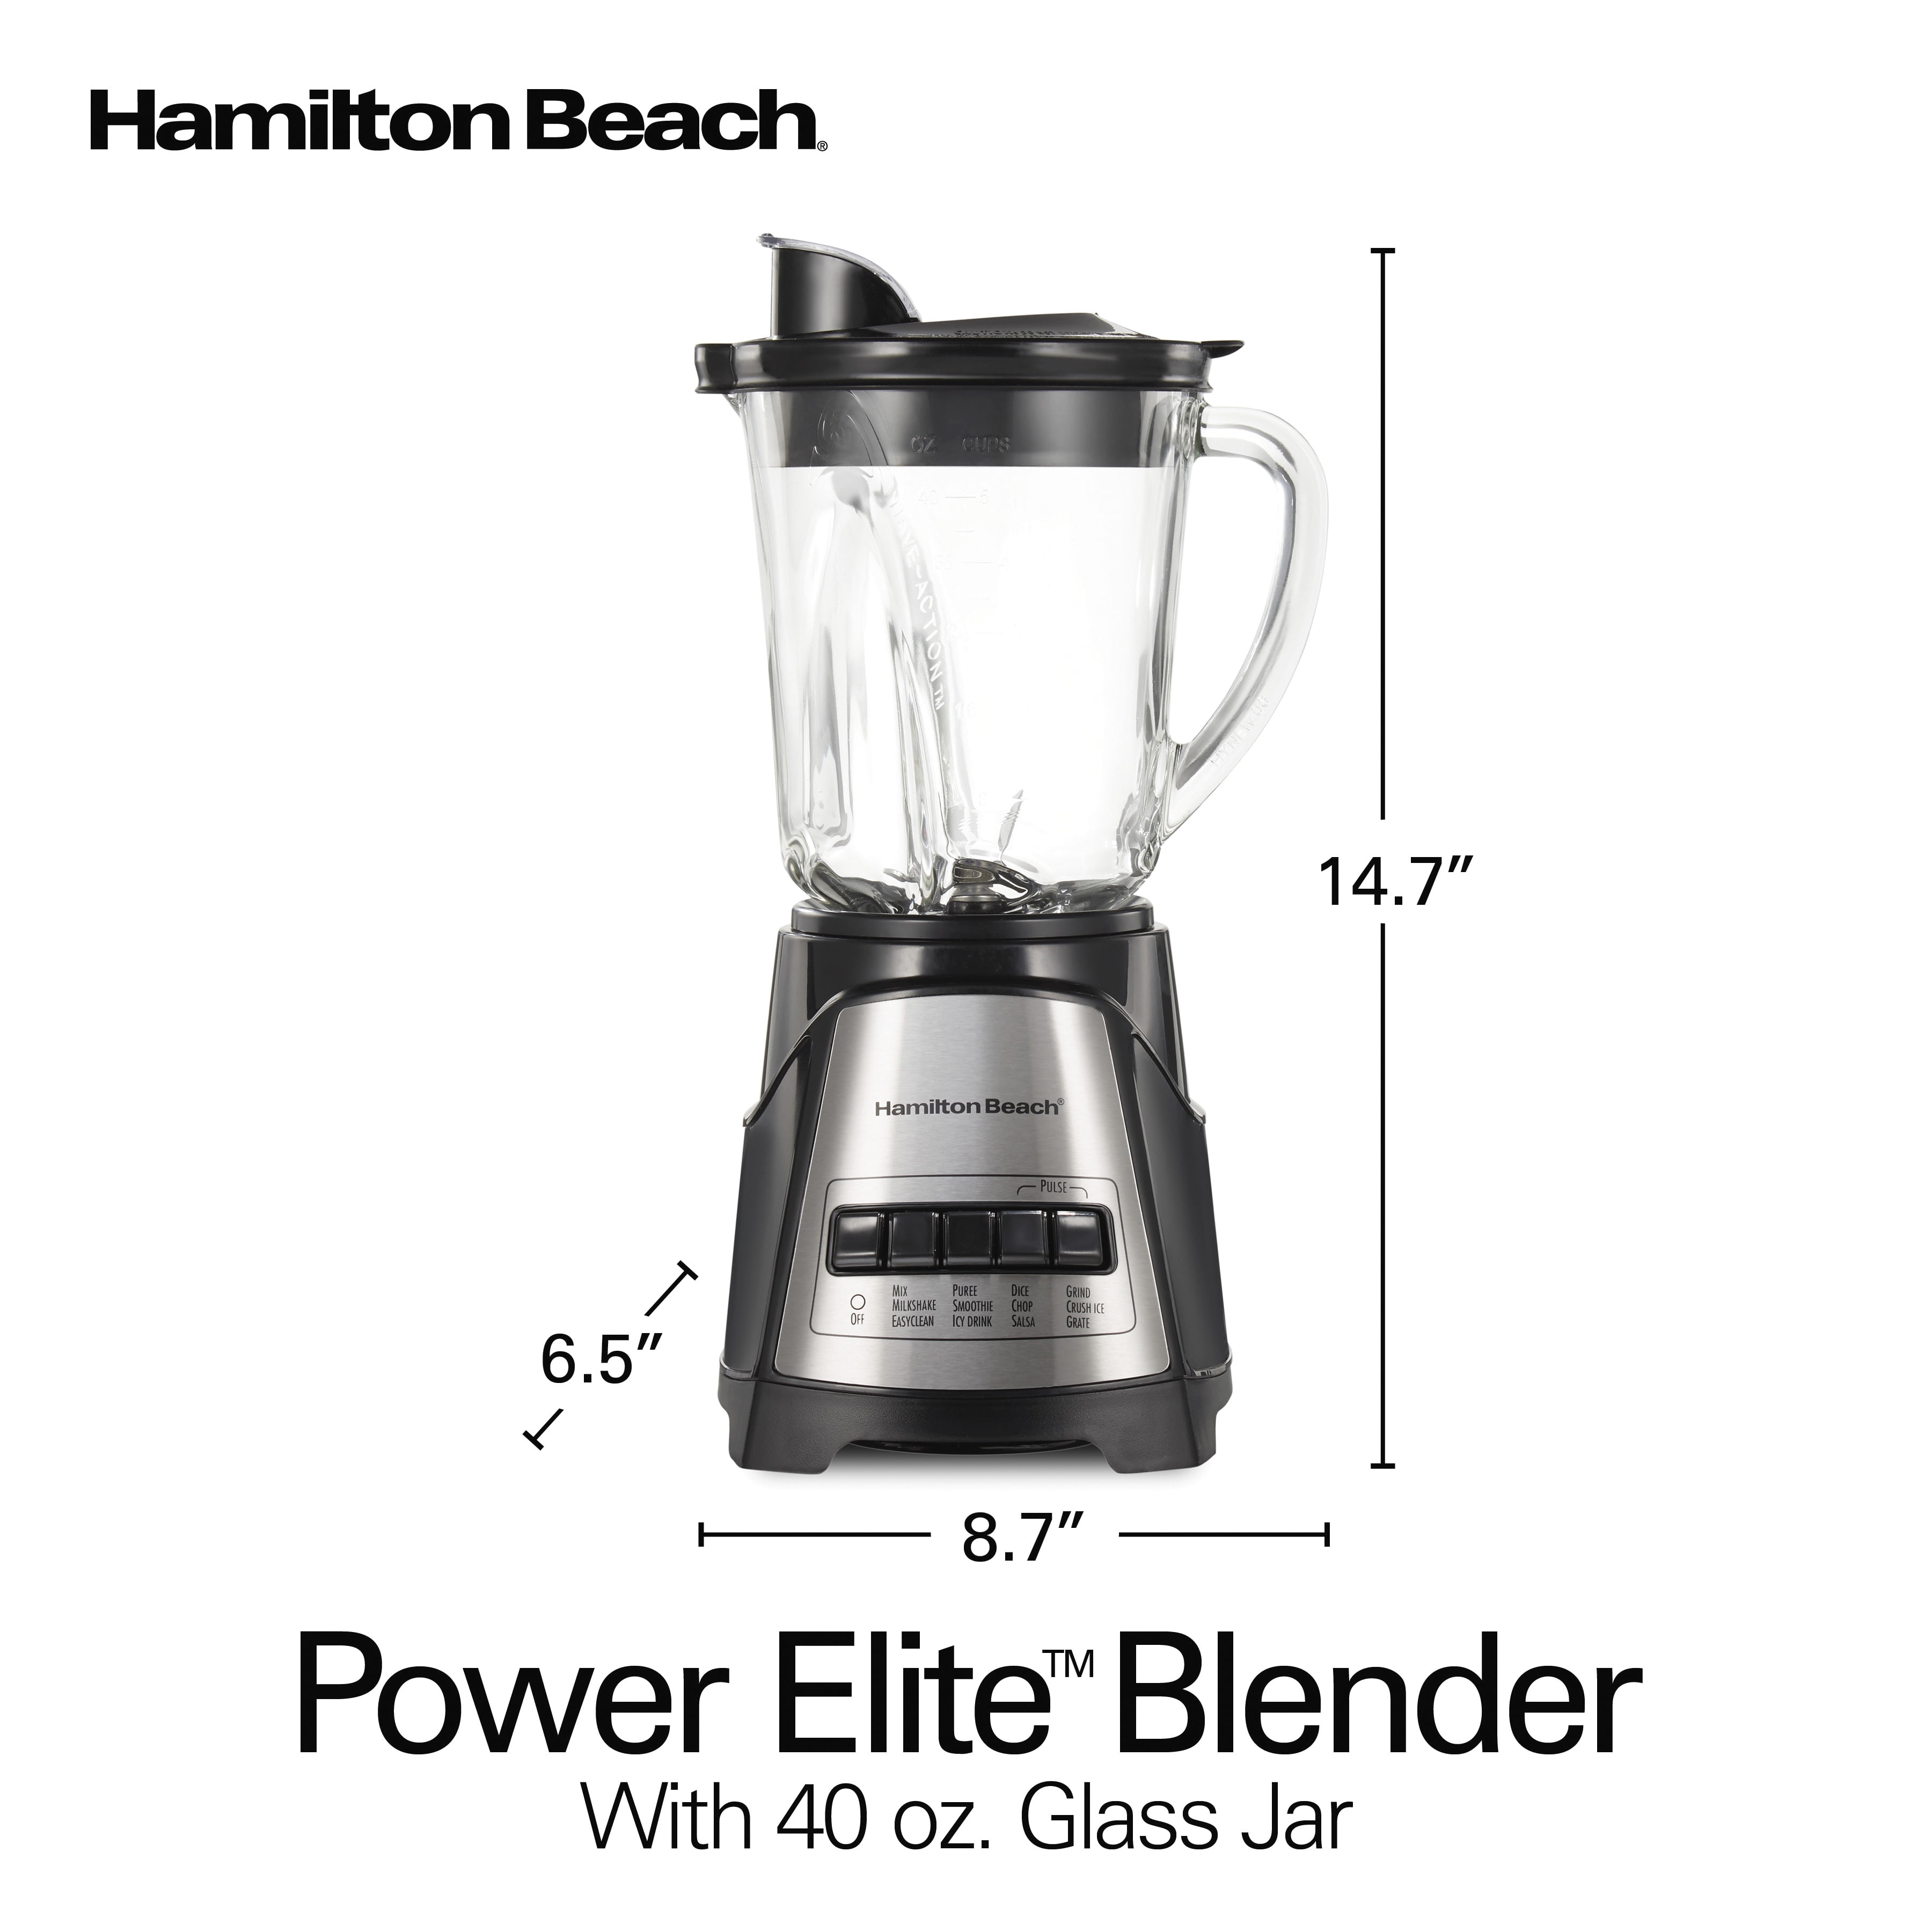  Hamilton Beach Power Elite Blender with 12 Functions